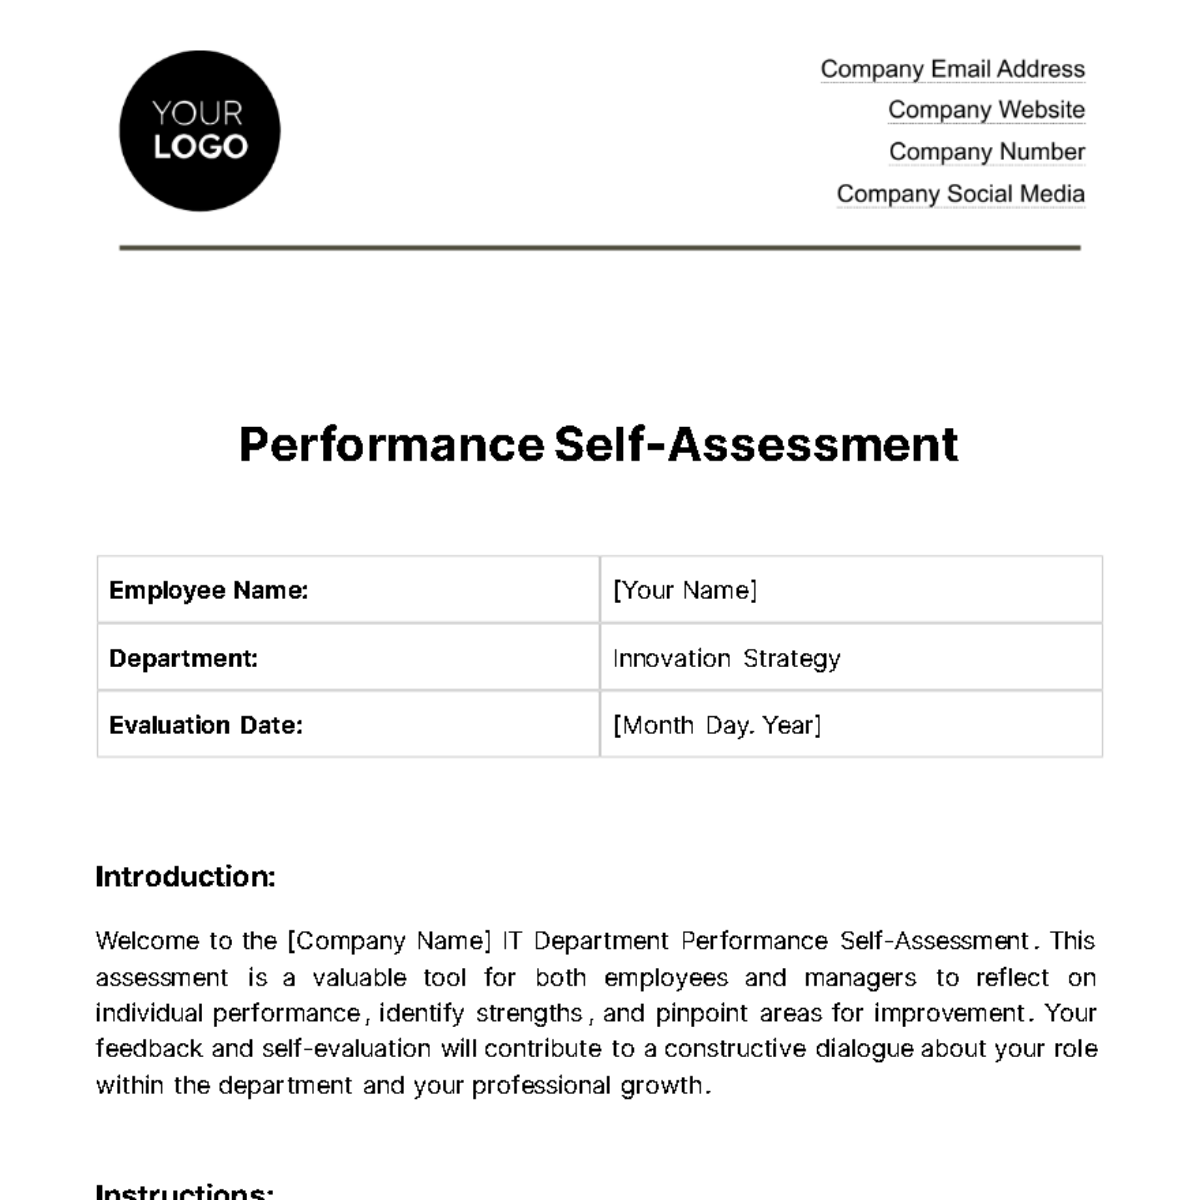 Free Performance Self-Assessment HR Template